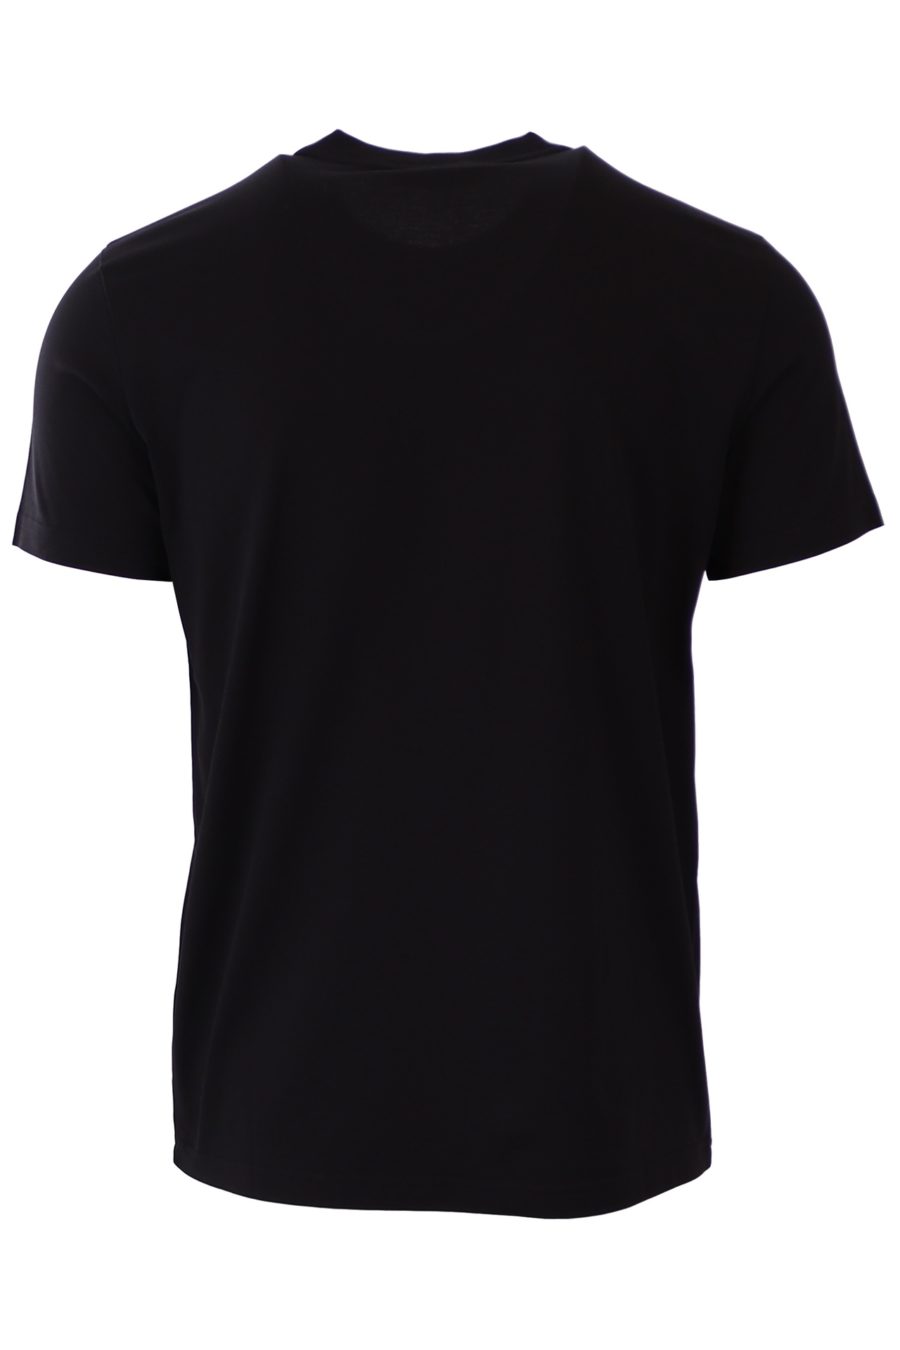 Camiseta Givenchy Paris negra slim fit - fa204ec9d1ad0bce0d4ac7f5e43f7203532999a1